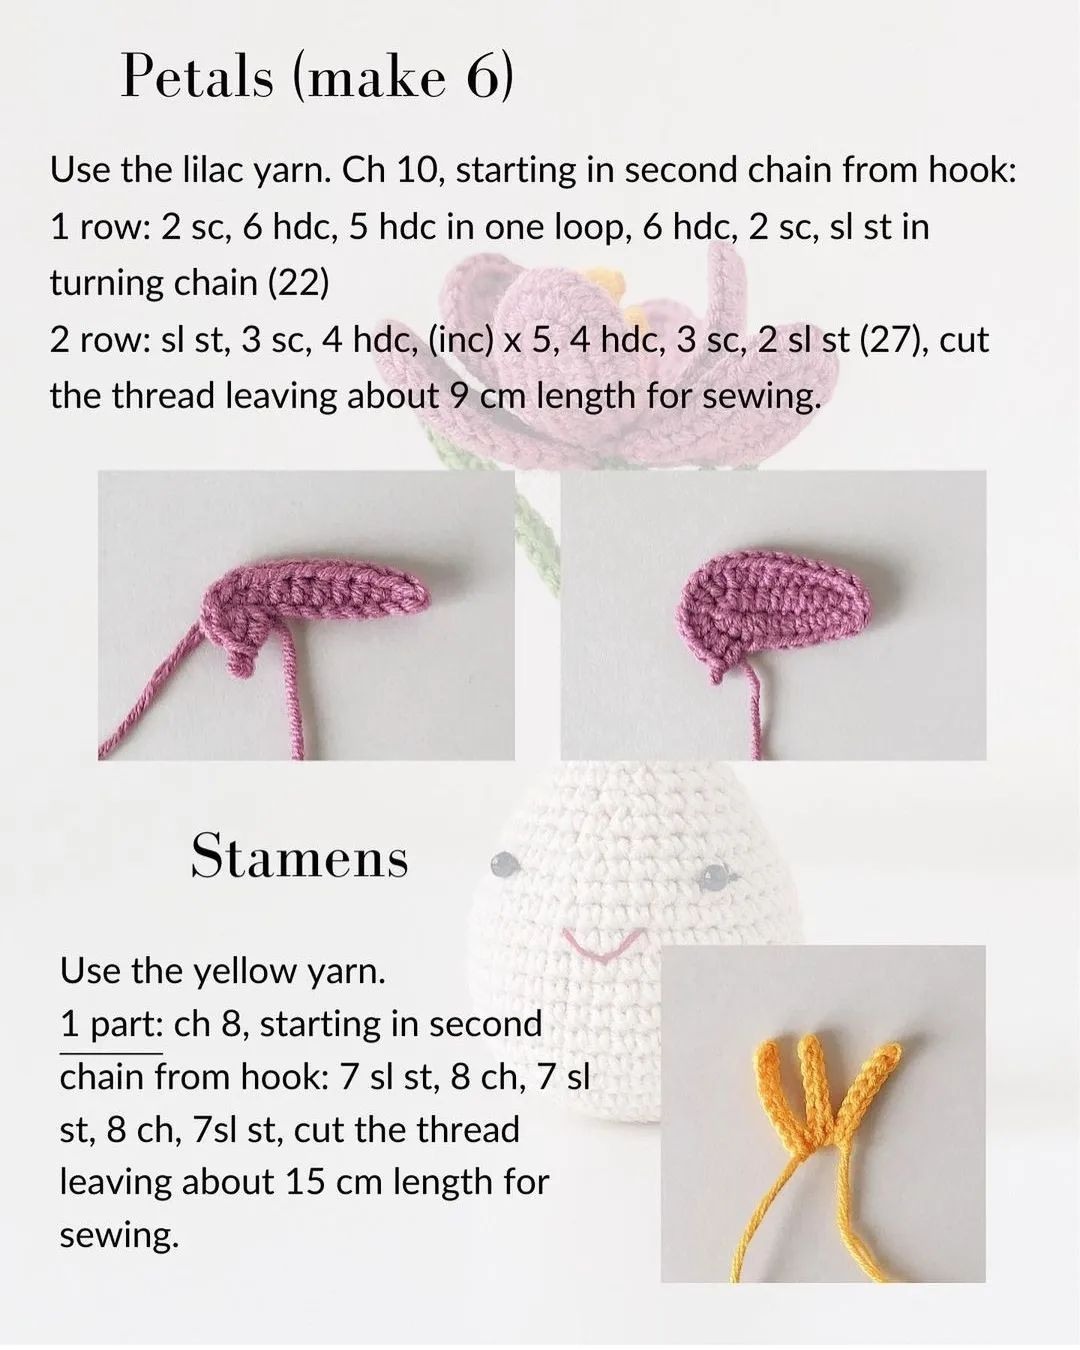 Daffodils pot crochet pattern